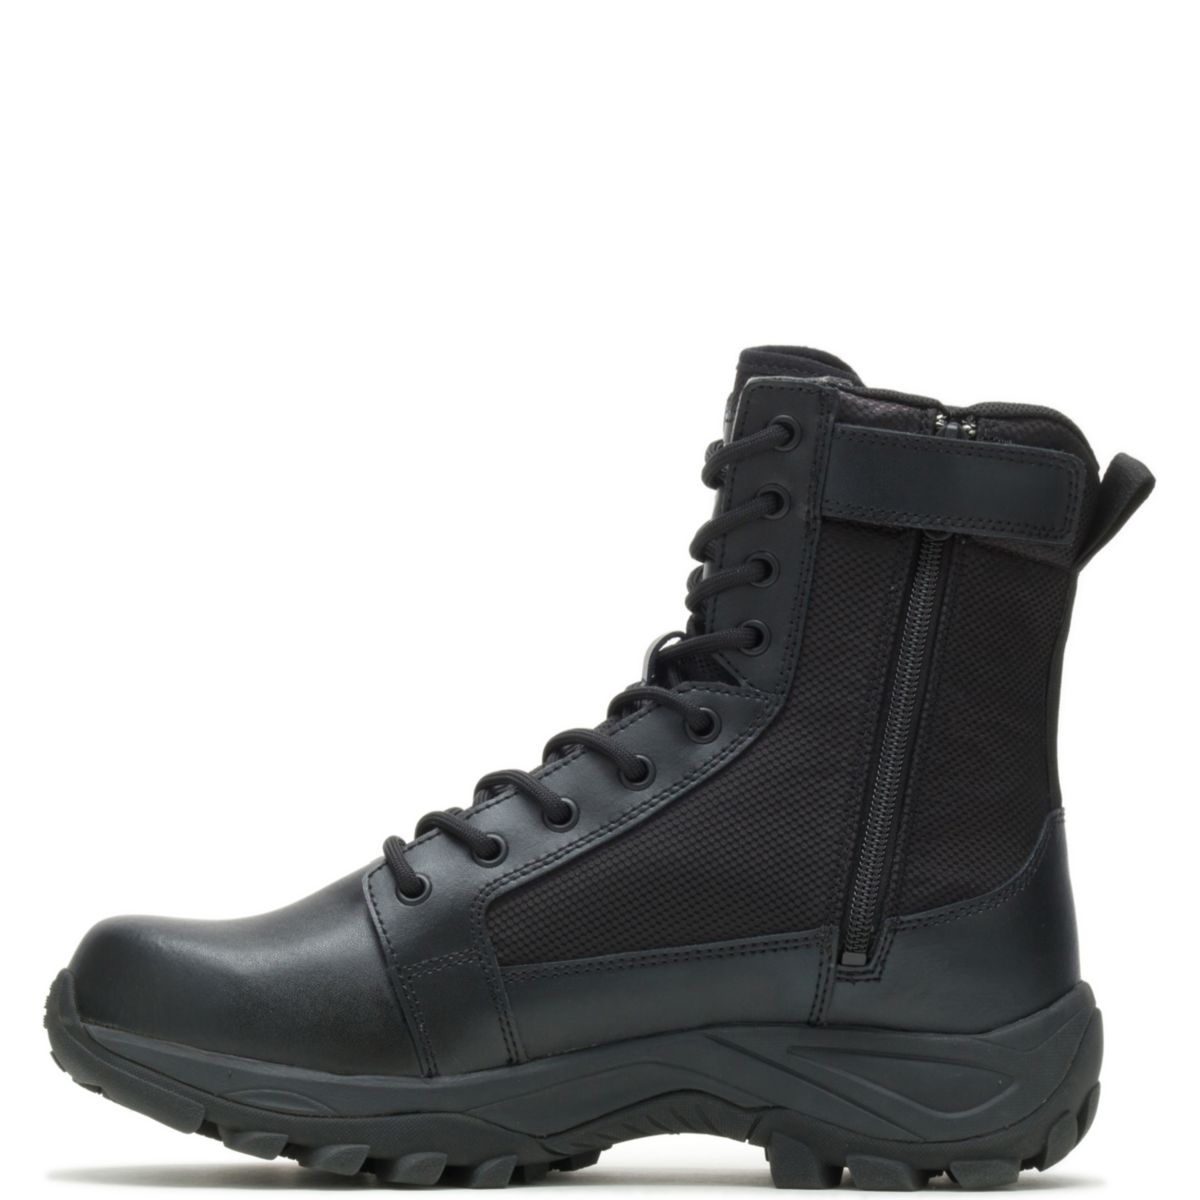 Bates Men's Fuse 8-inch Side Zip Waterproof Boot Black - E06508 BLACK - BLACK, 9.5